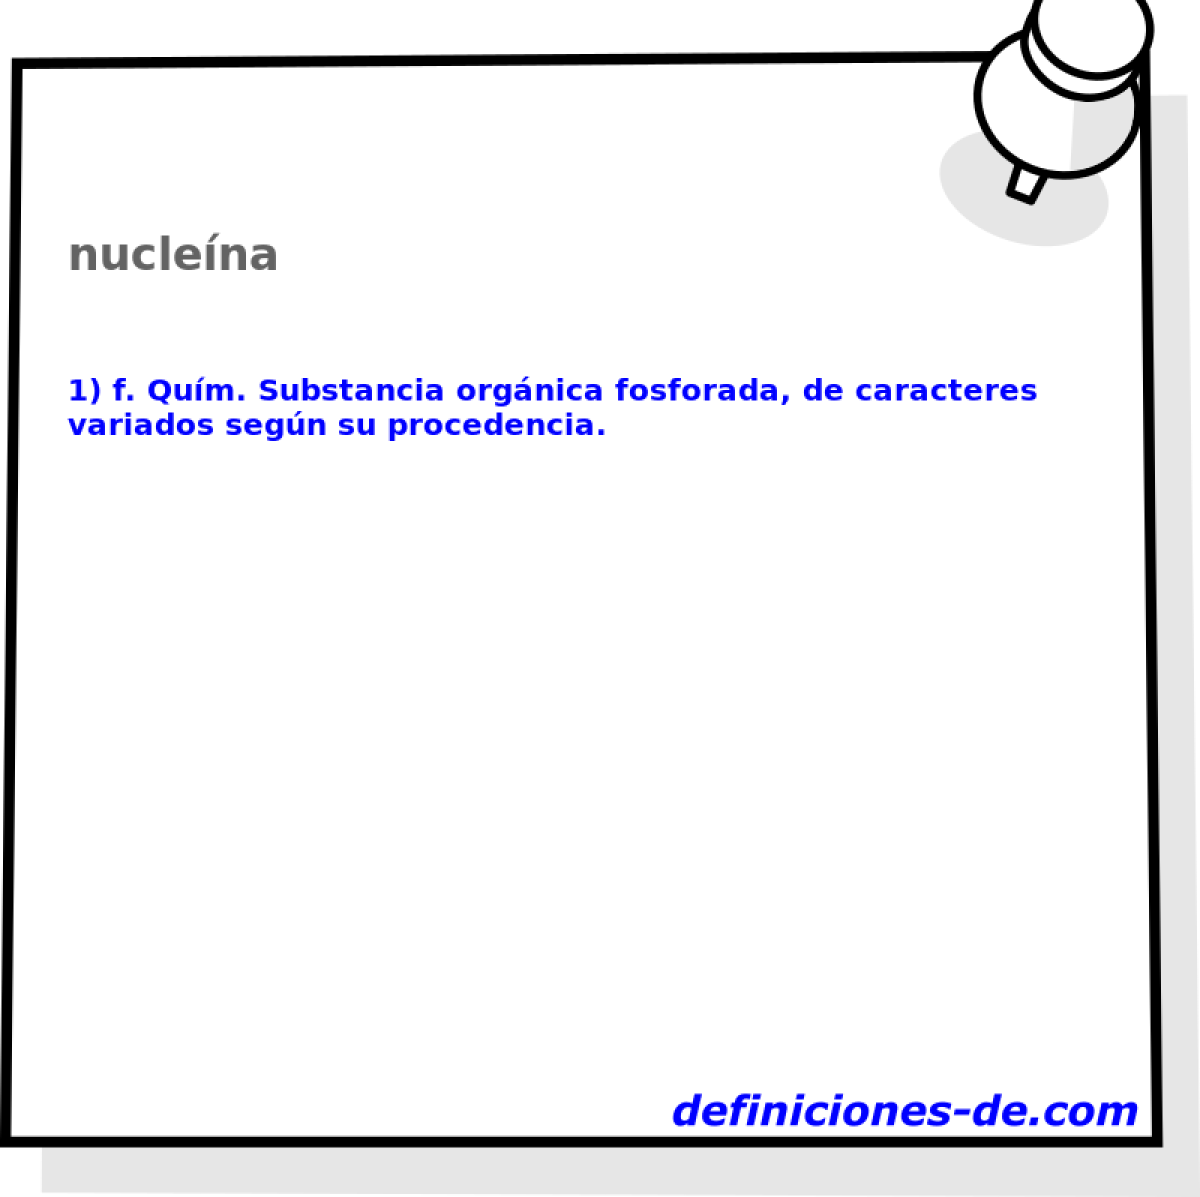 nuclena 